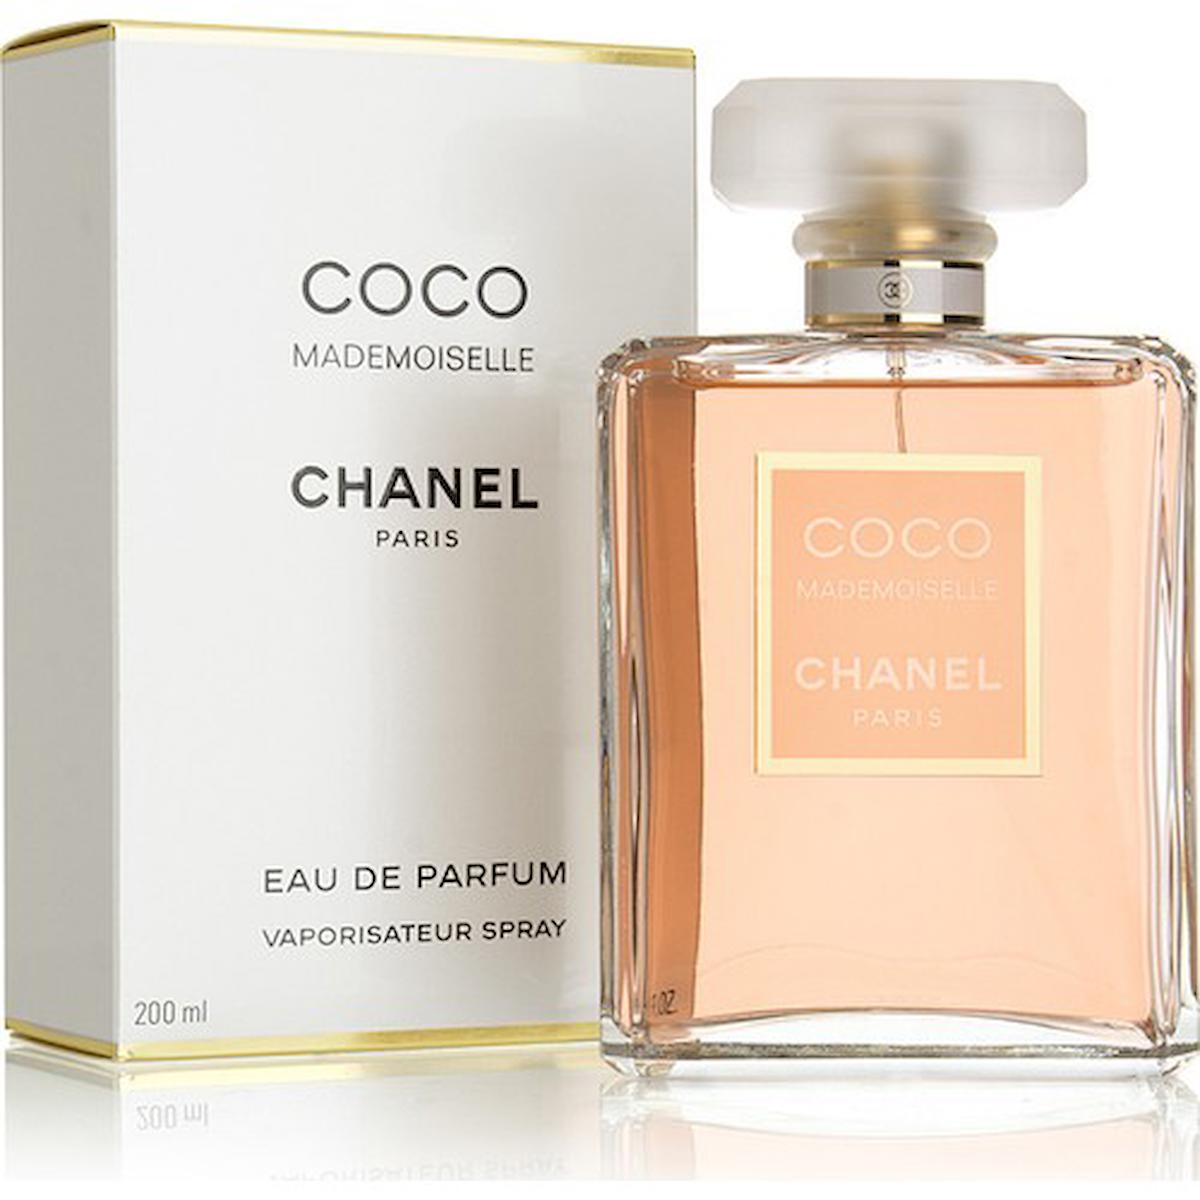 Chanel Coco Mademoiselle EDP Oryantal Kadın Parfüm 200 ml